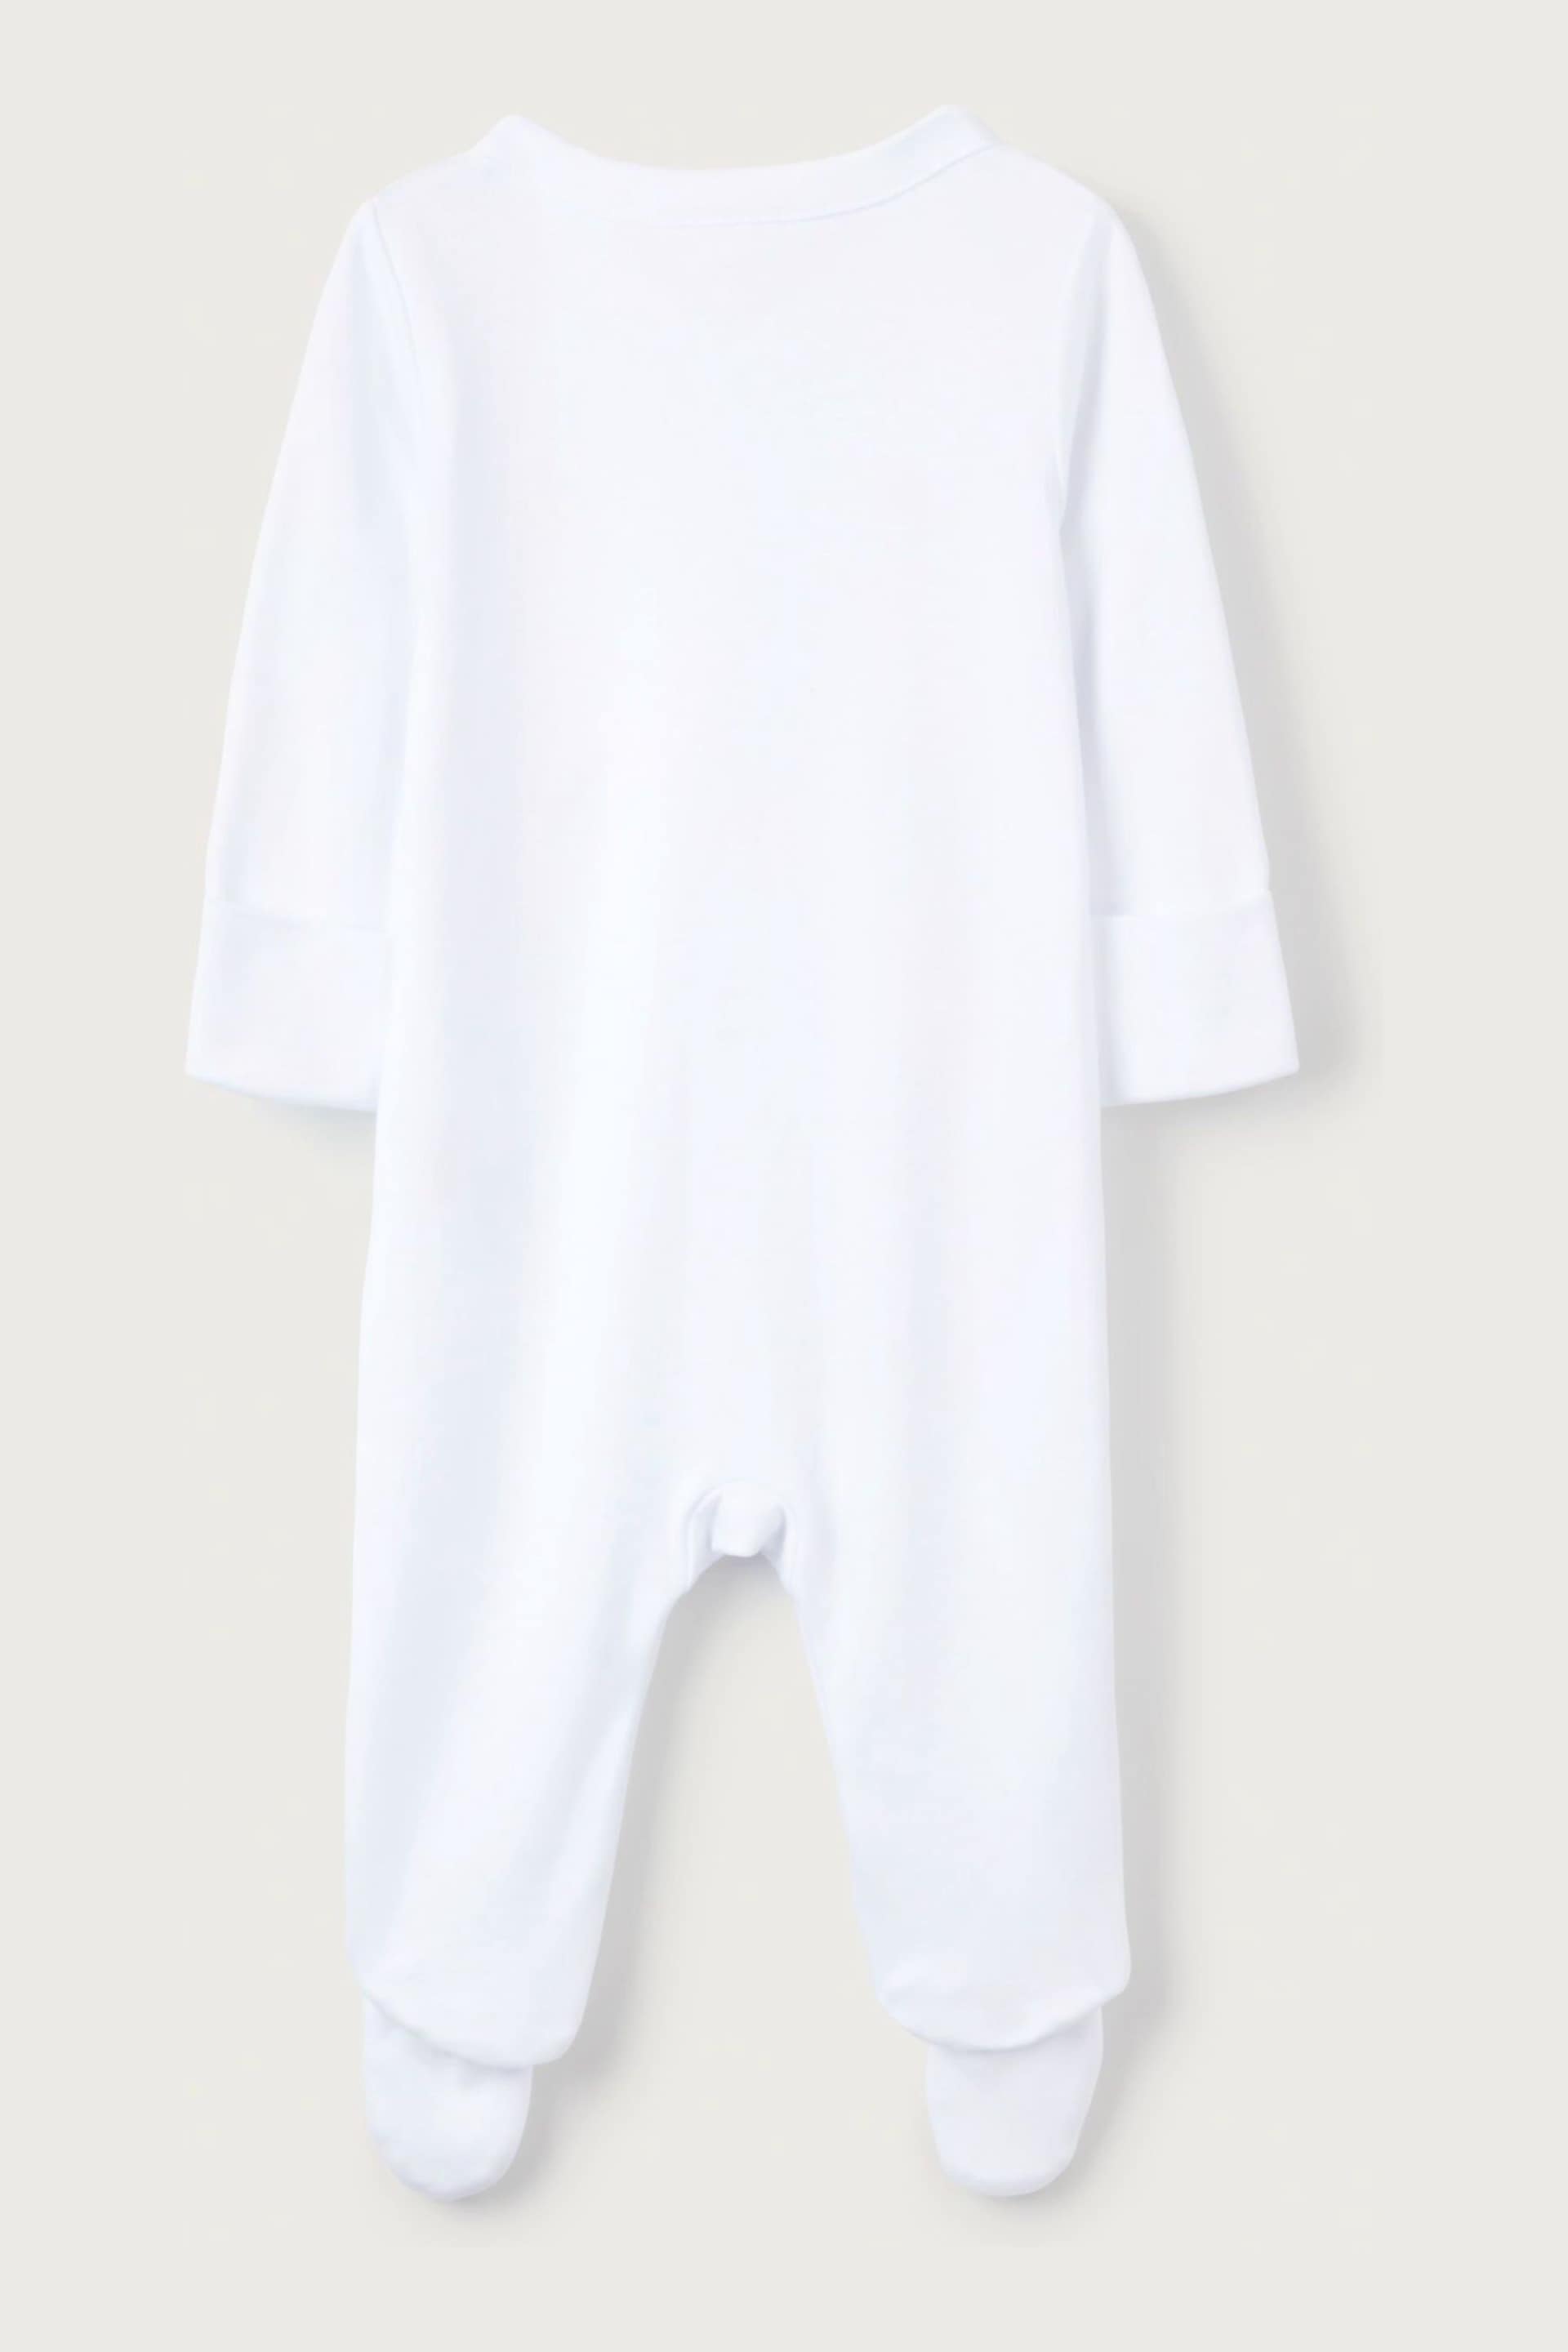 The White Company Organic Cotton Safari Boat Embroidery White Sleepsuit - Image 4 of 4